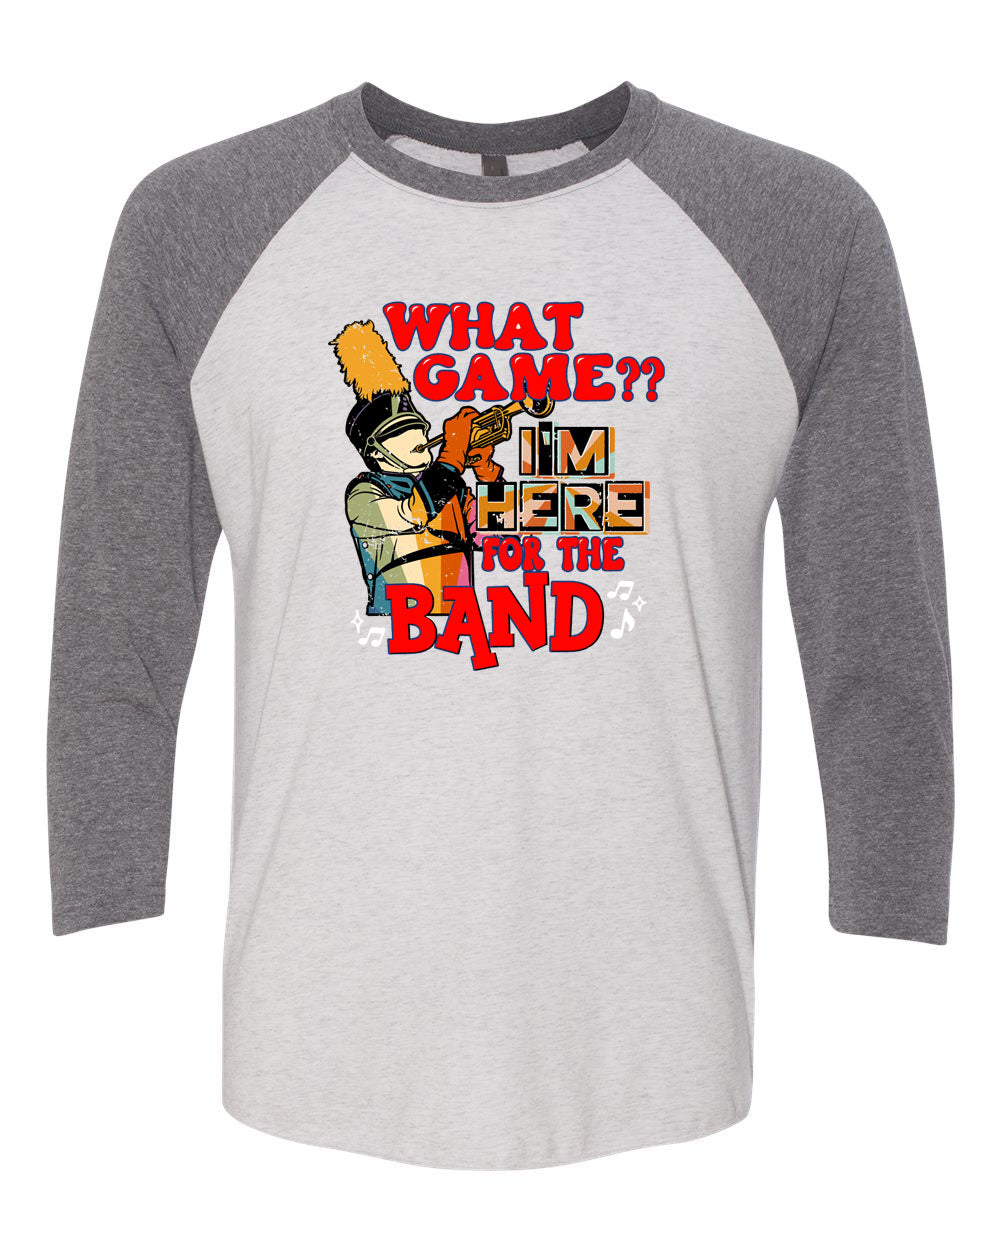 North Warren Marching Band design 2 raglan shirt